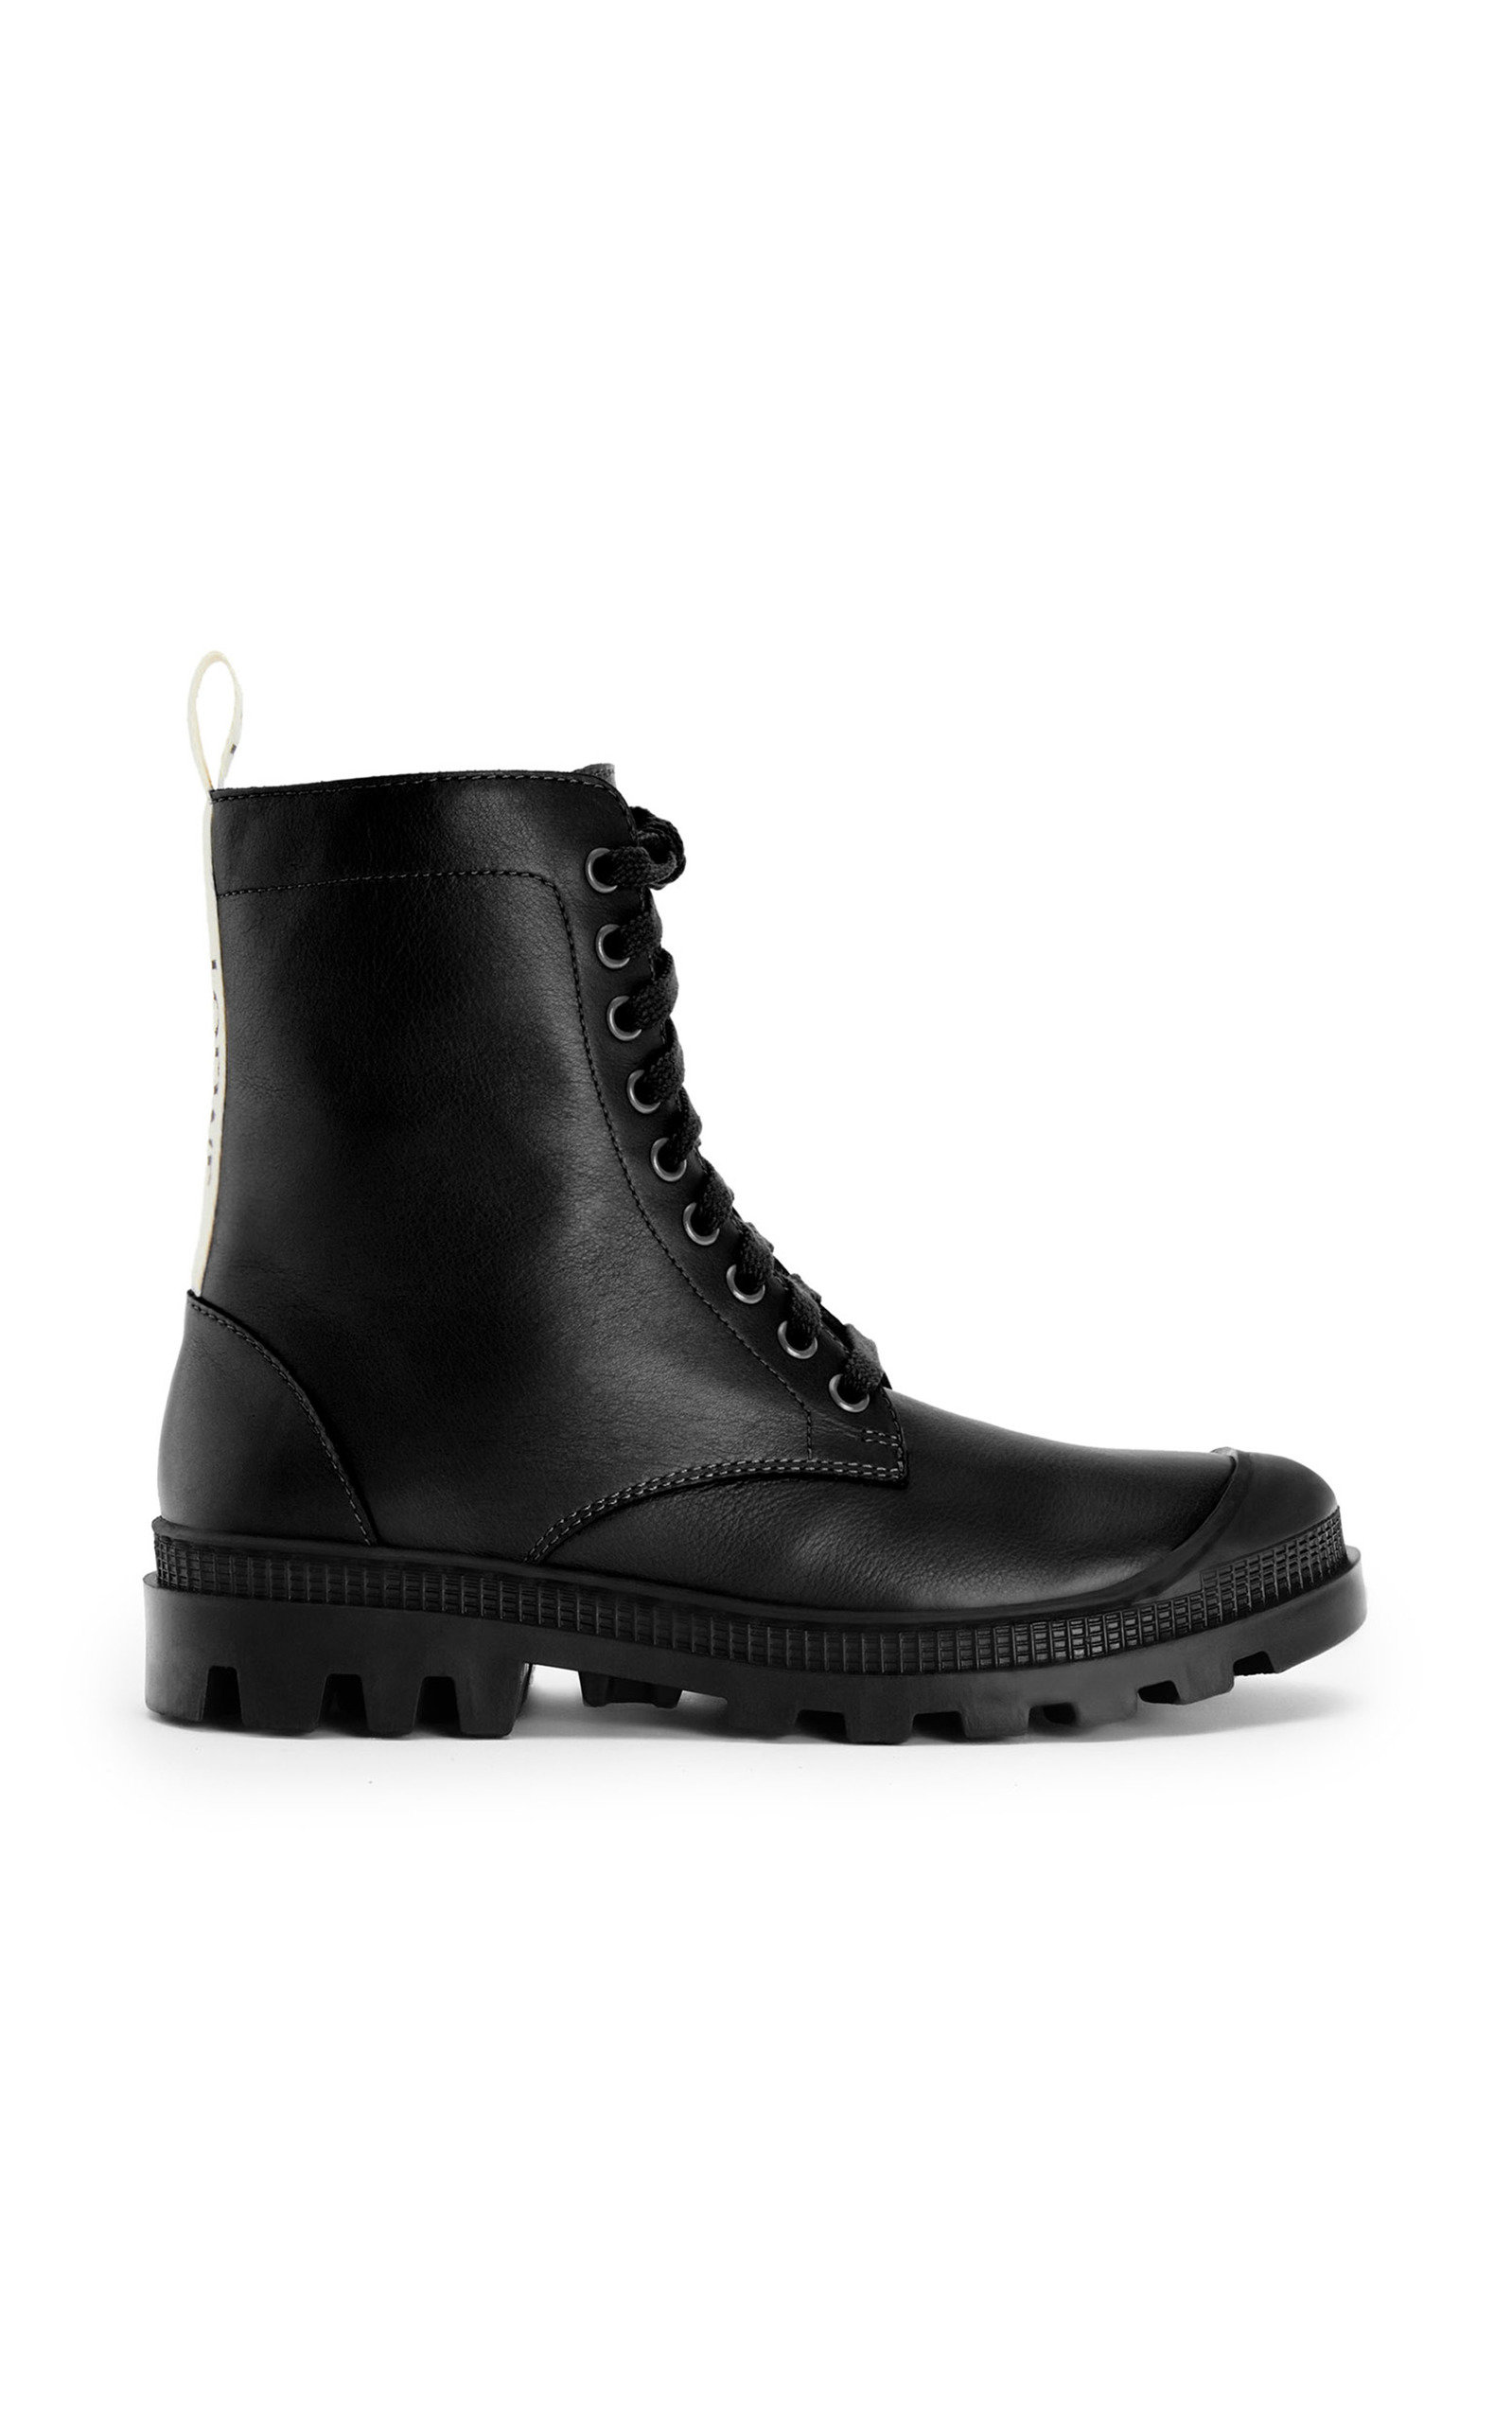 Loewe - Women's Leather Combat Boots - Black - Moda Operandi